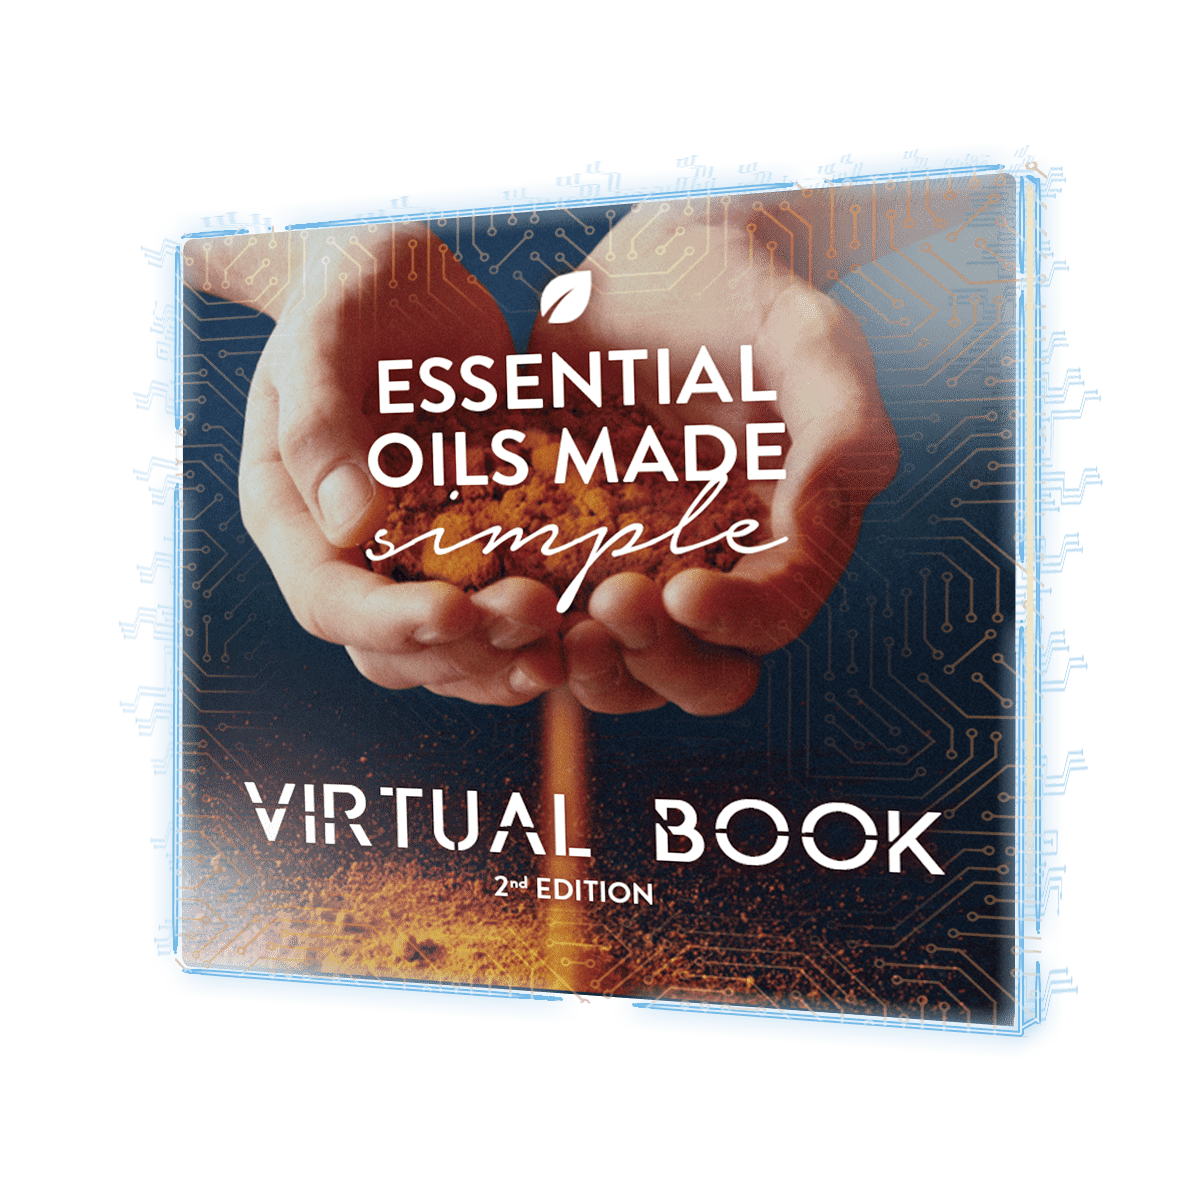 Essential Oils Made Simple 2nd Edition [Livre virtuel]